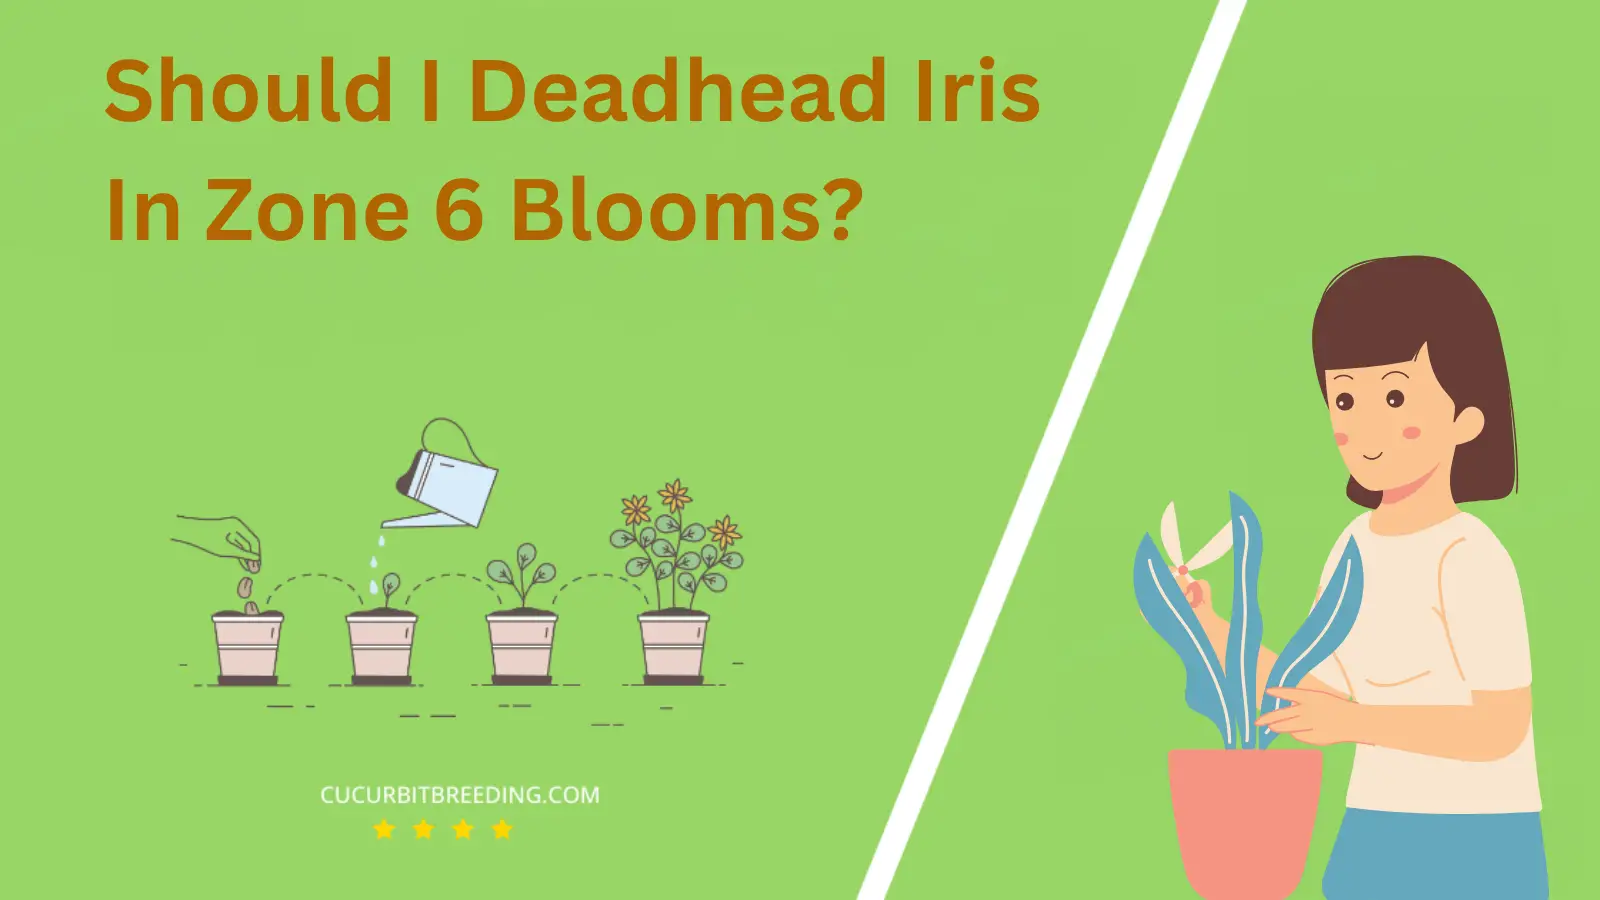 Should I Deadhead Iris In Zone 6 Blooms?